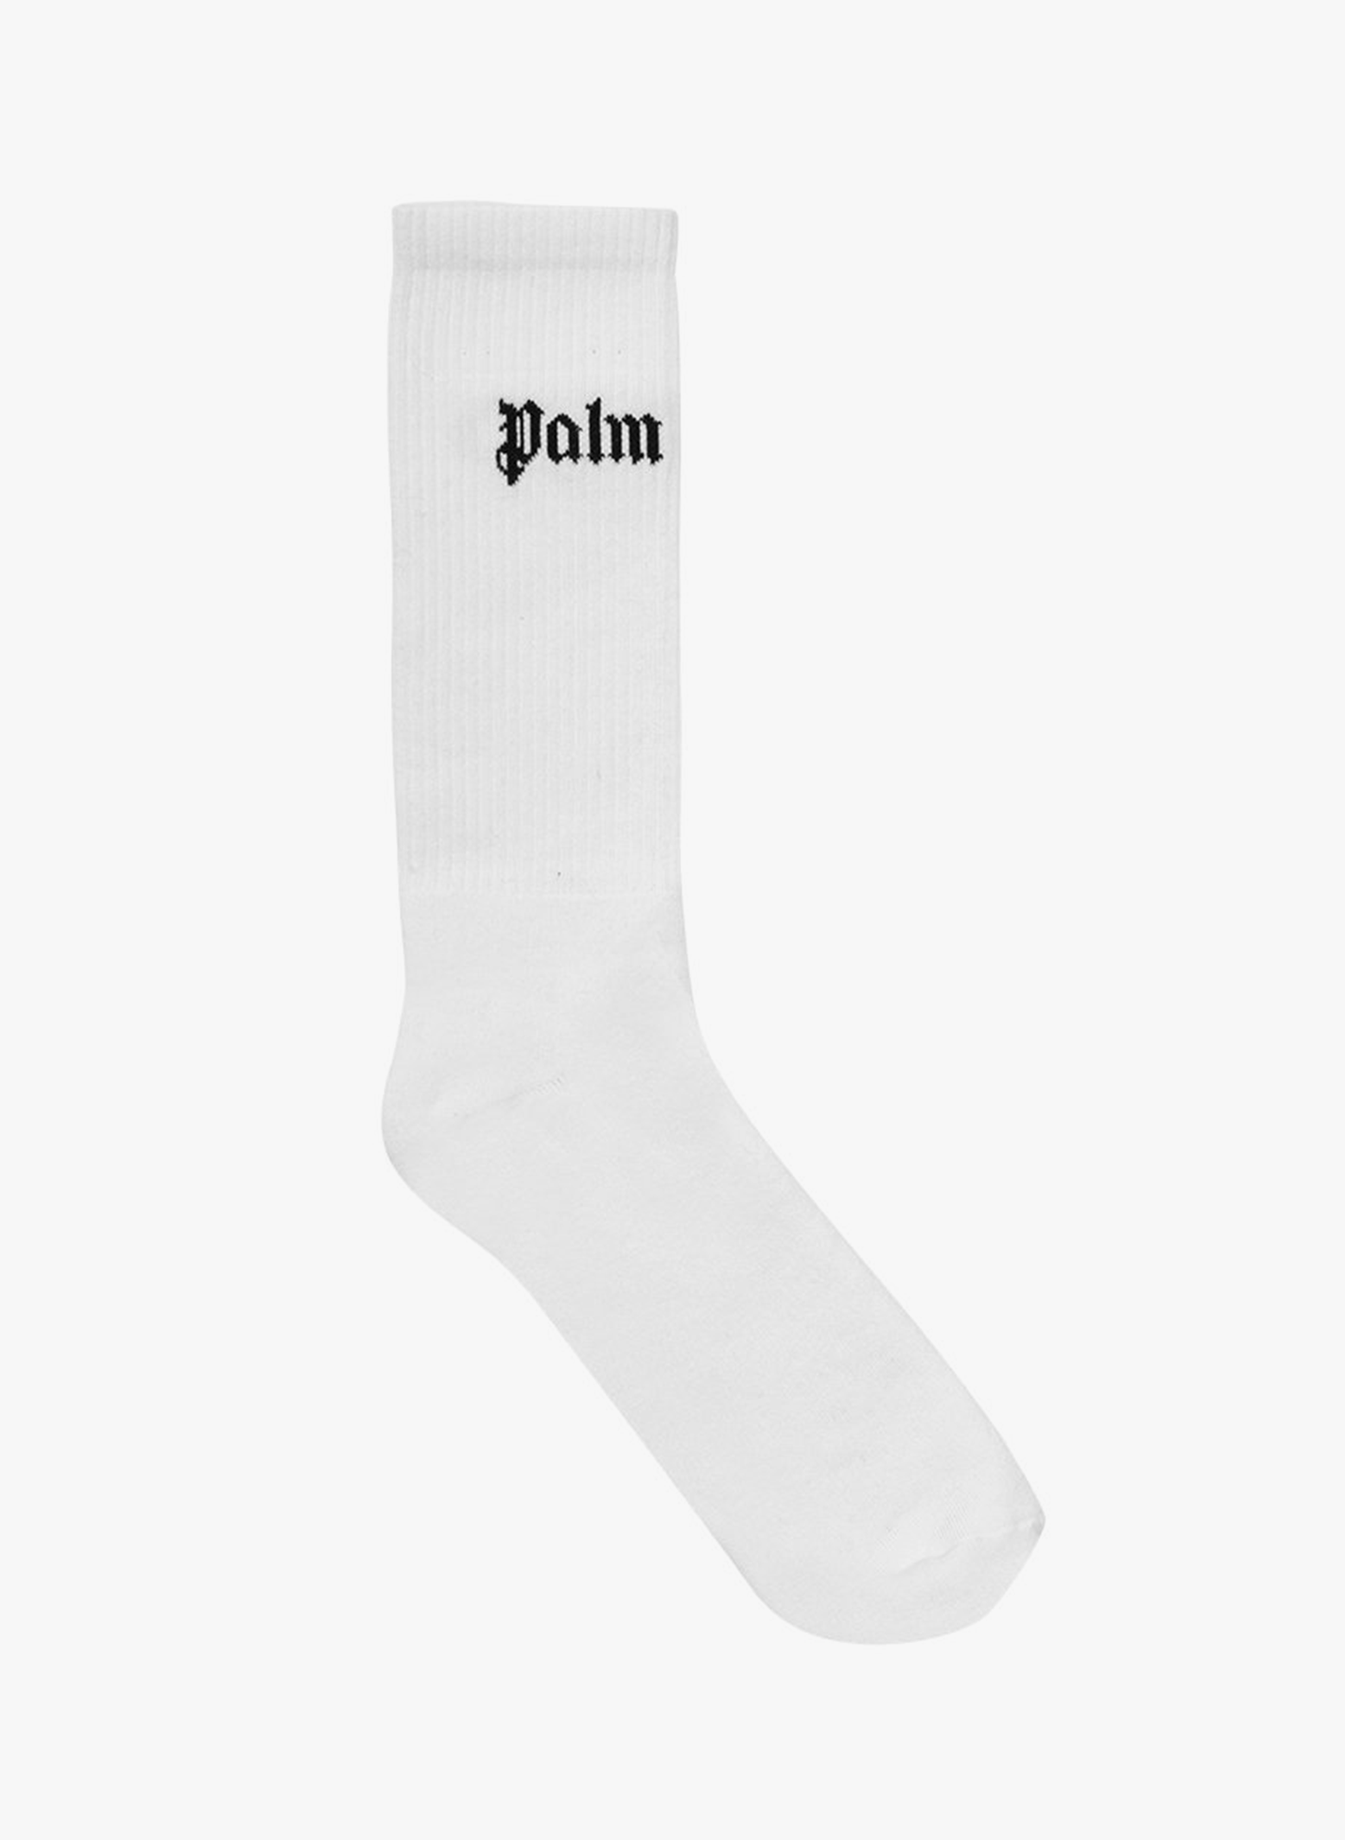 Palm Angels 'Horizontal Logo' Socks White - Mensquare